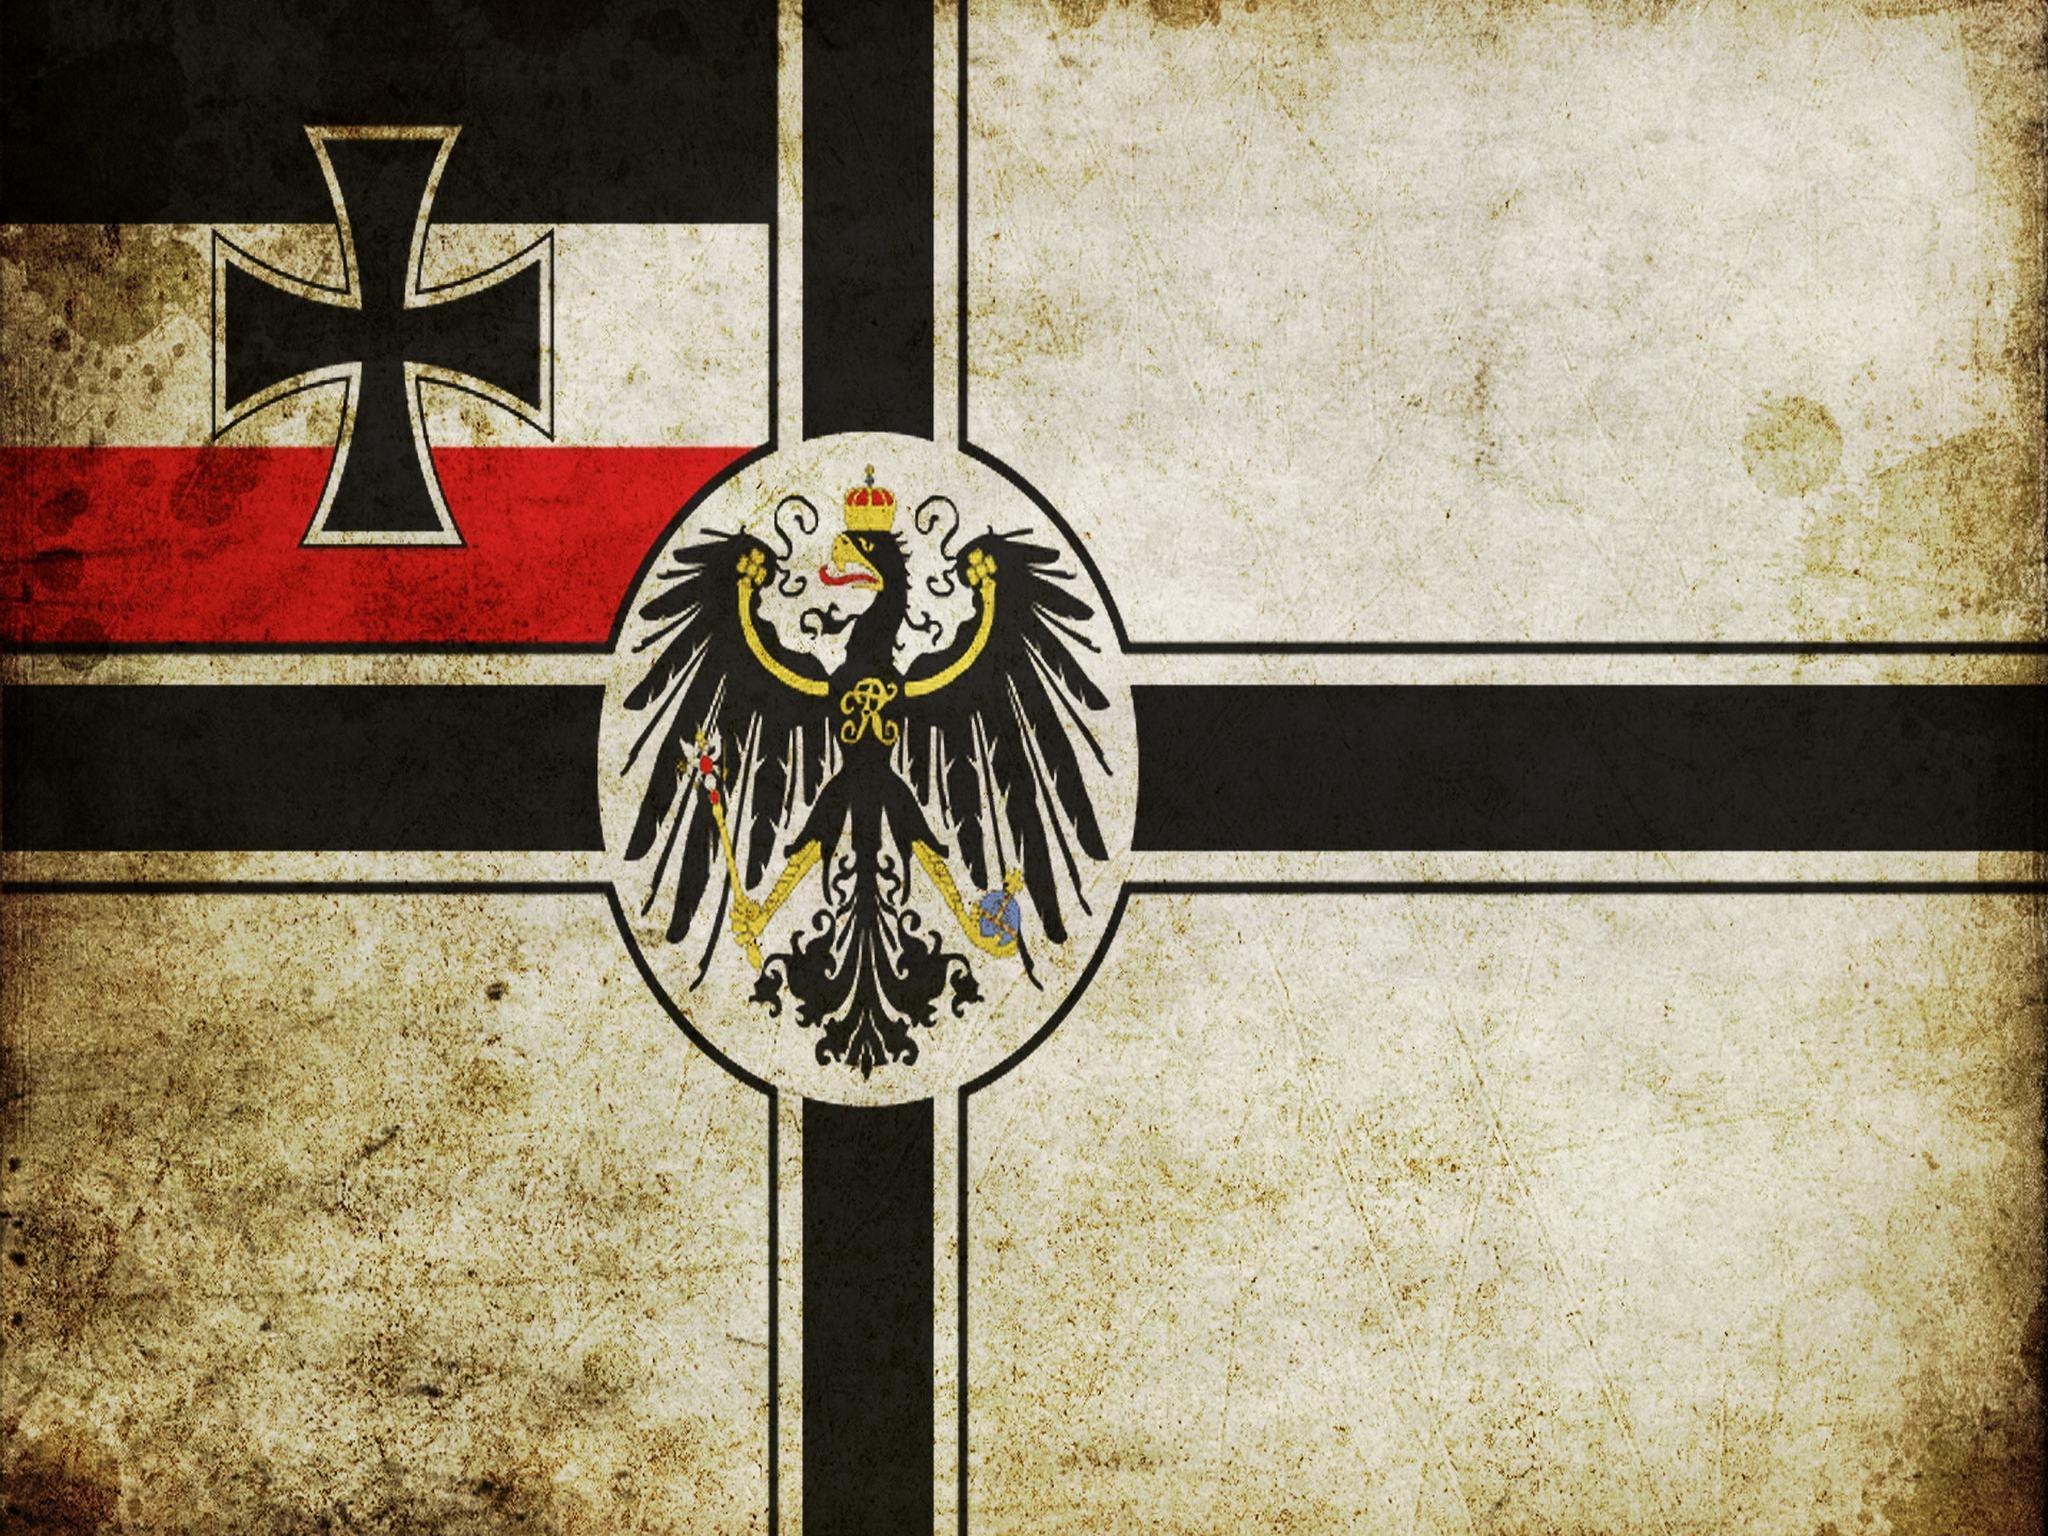 german empire german empire flag wallpaper